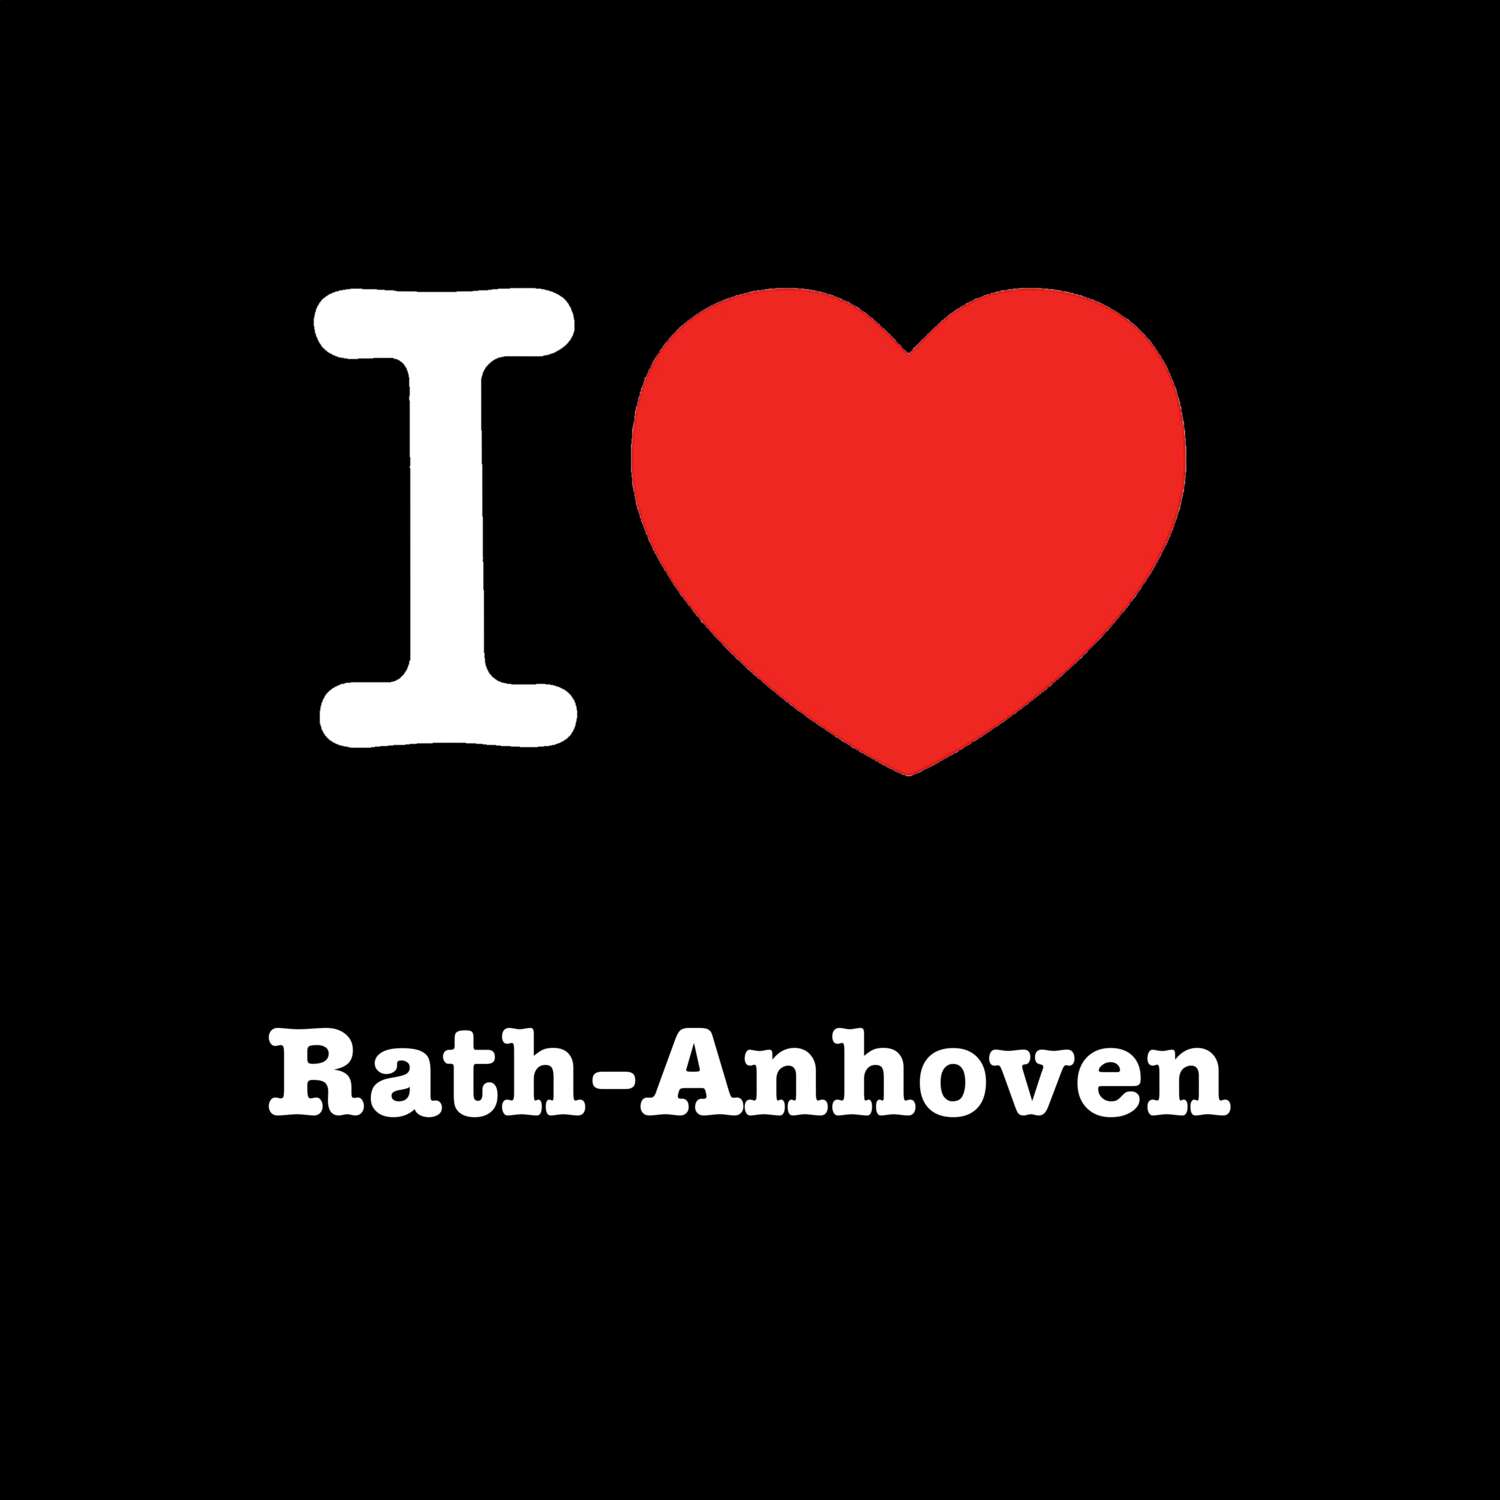 Rath-Anhoven T-Shirt »I love«